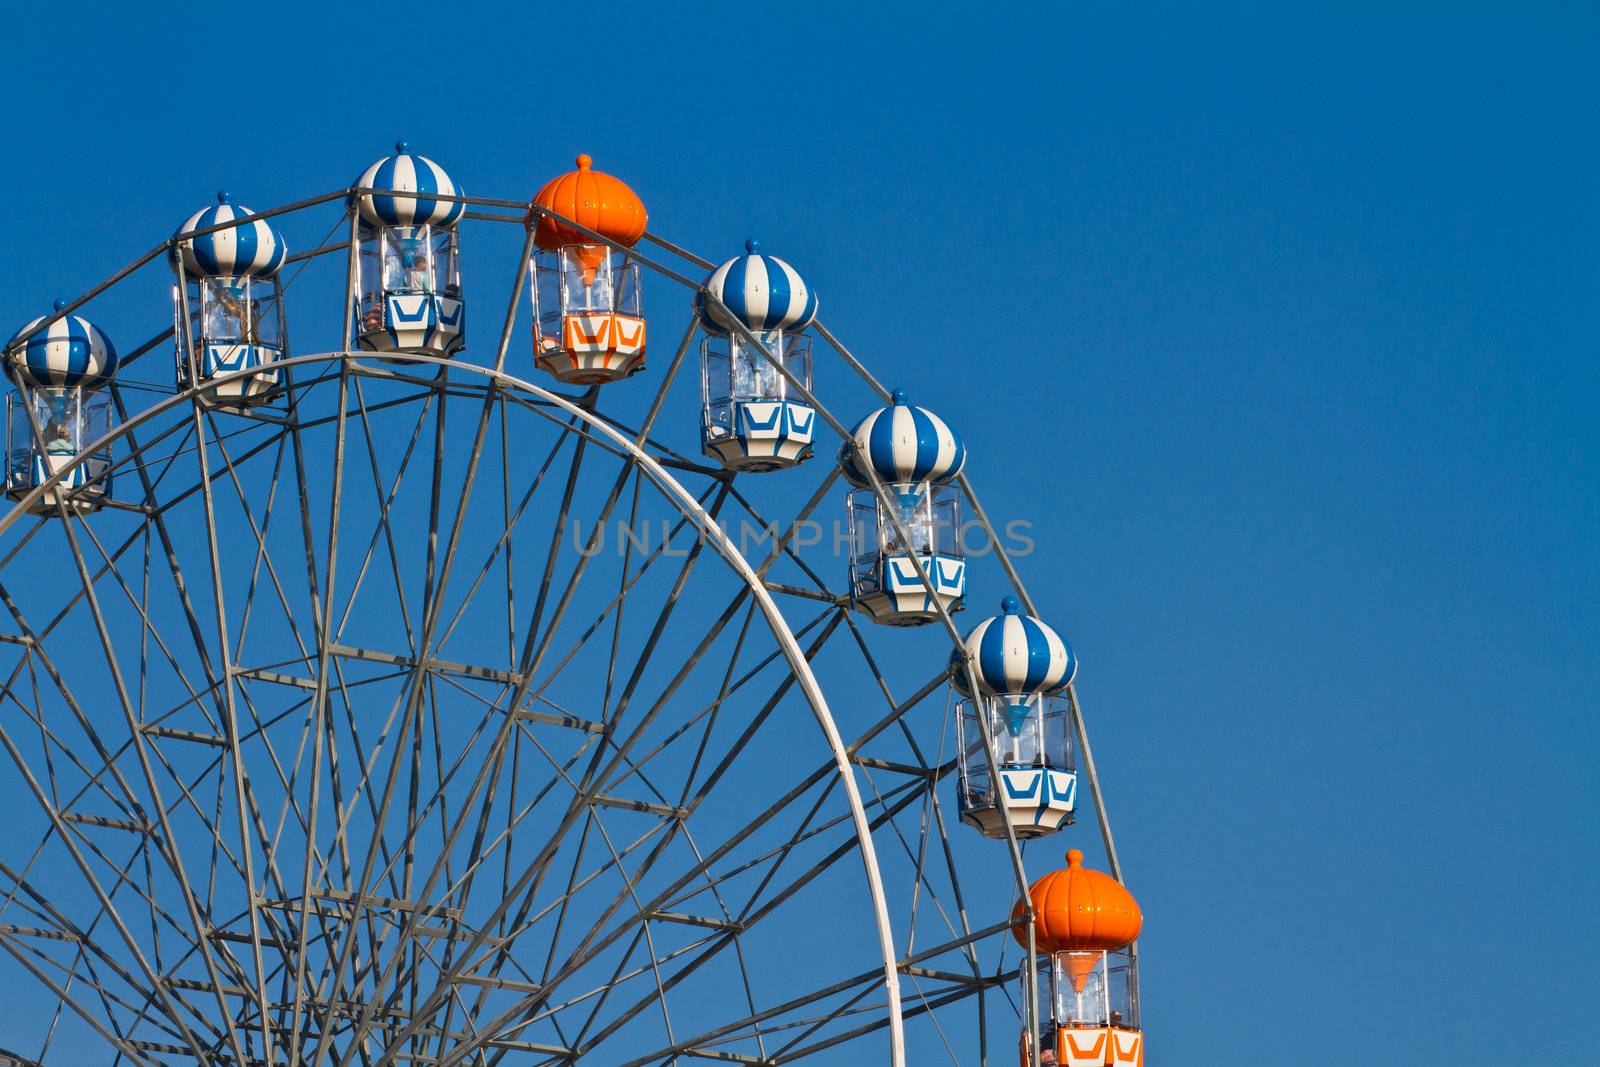 Ferris wheel on the blue sky by ta_khum